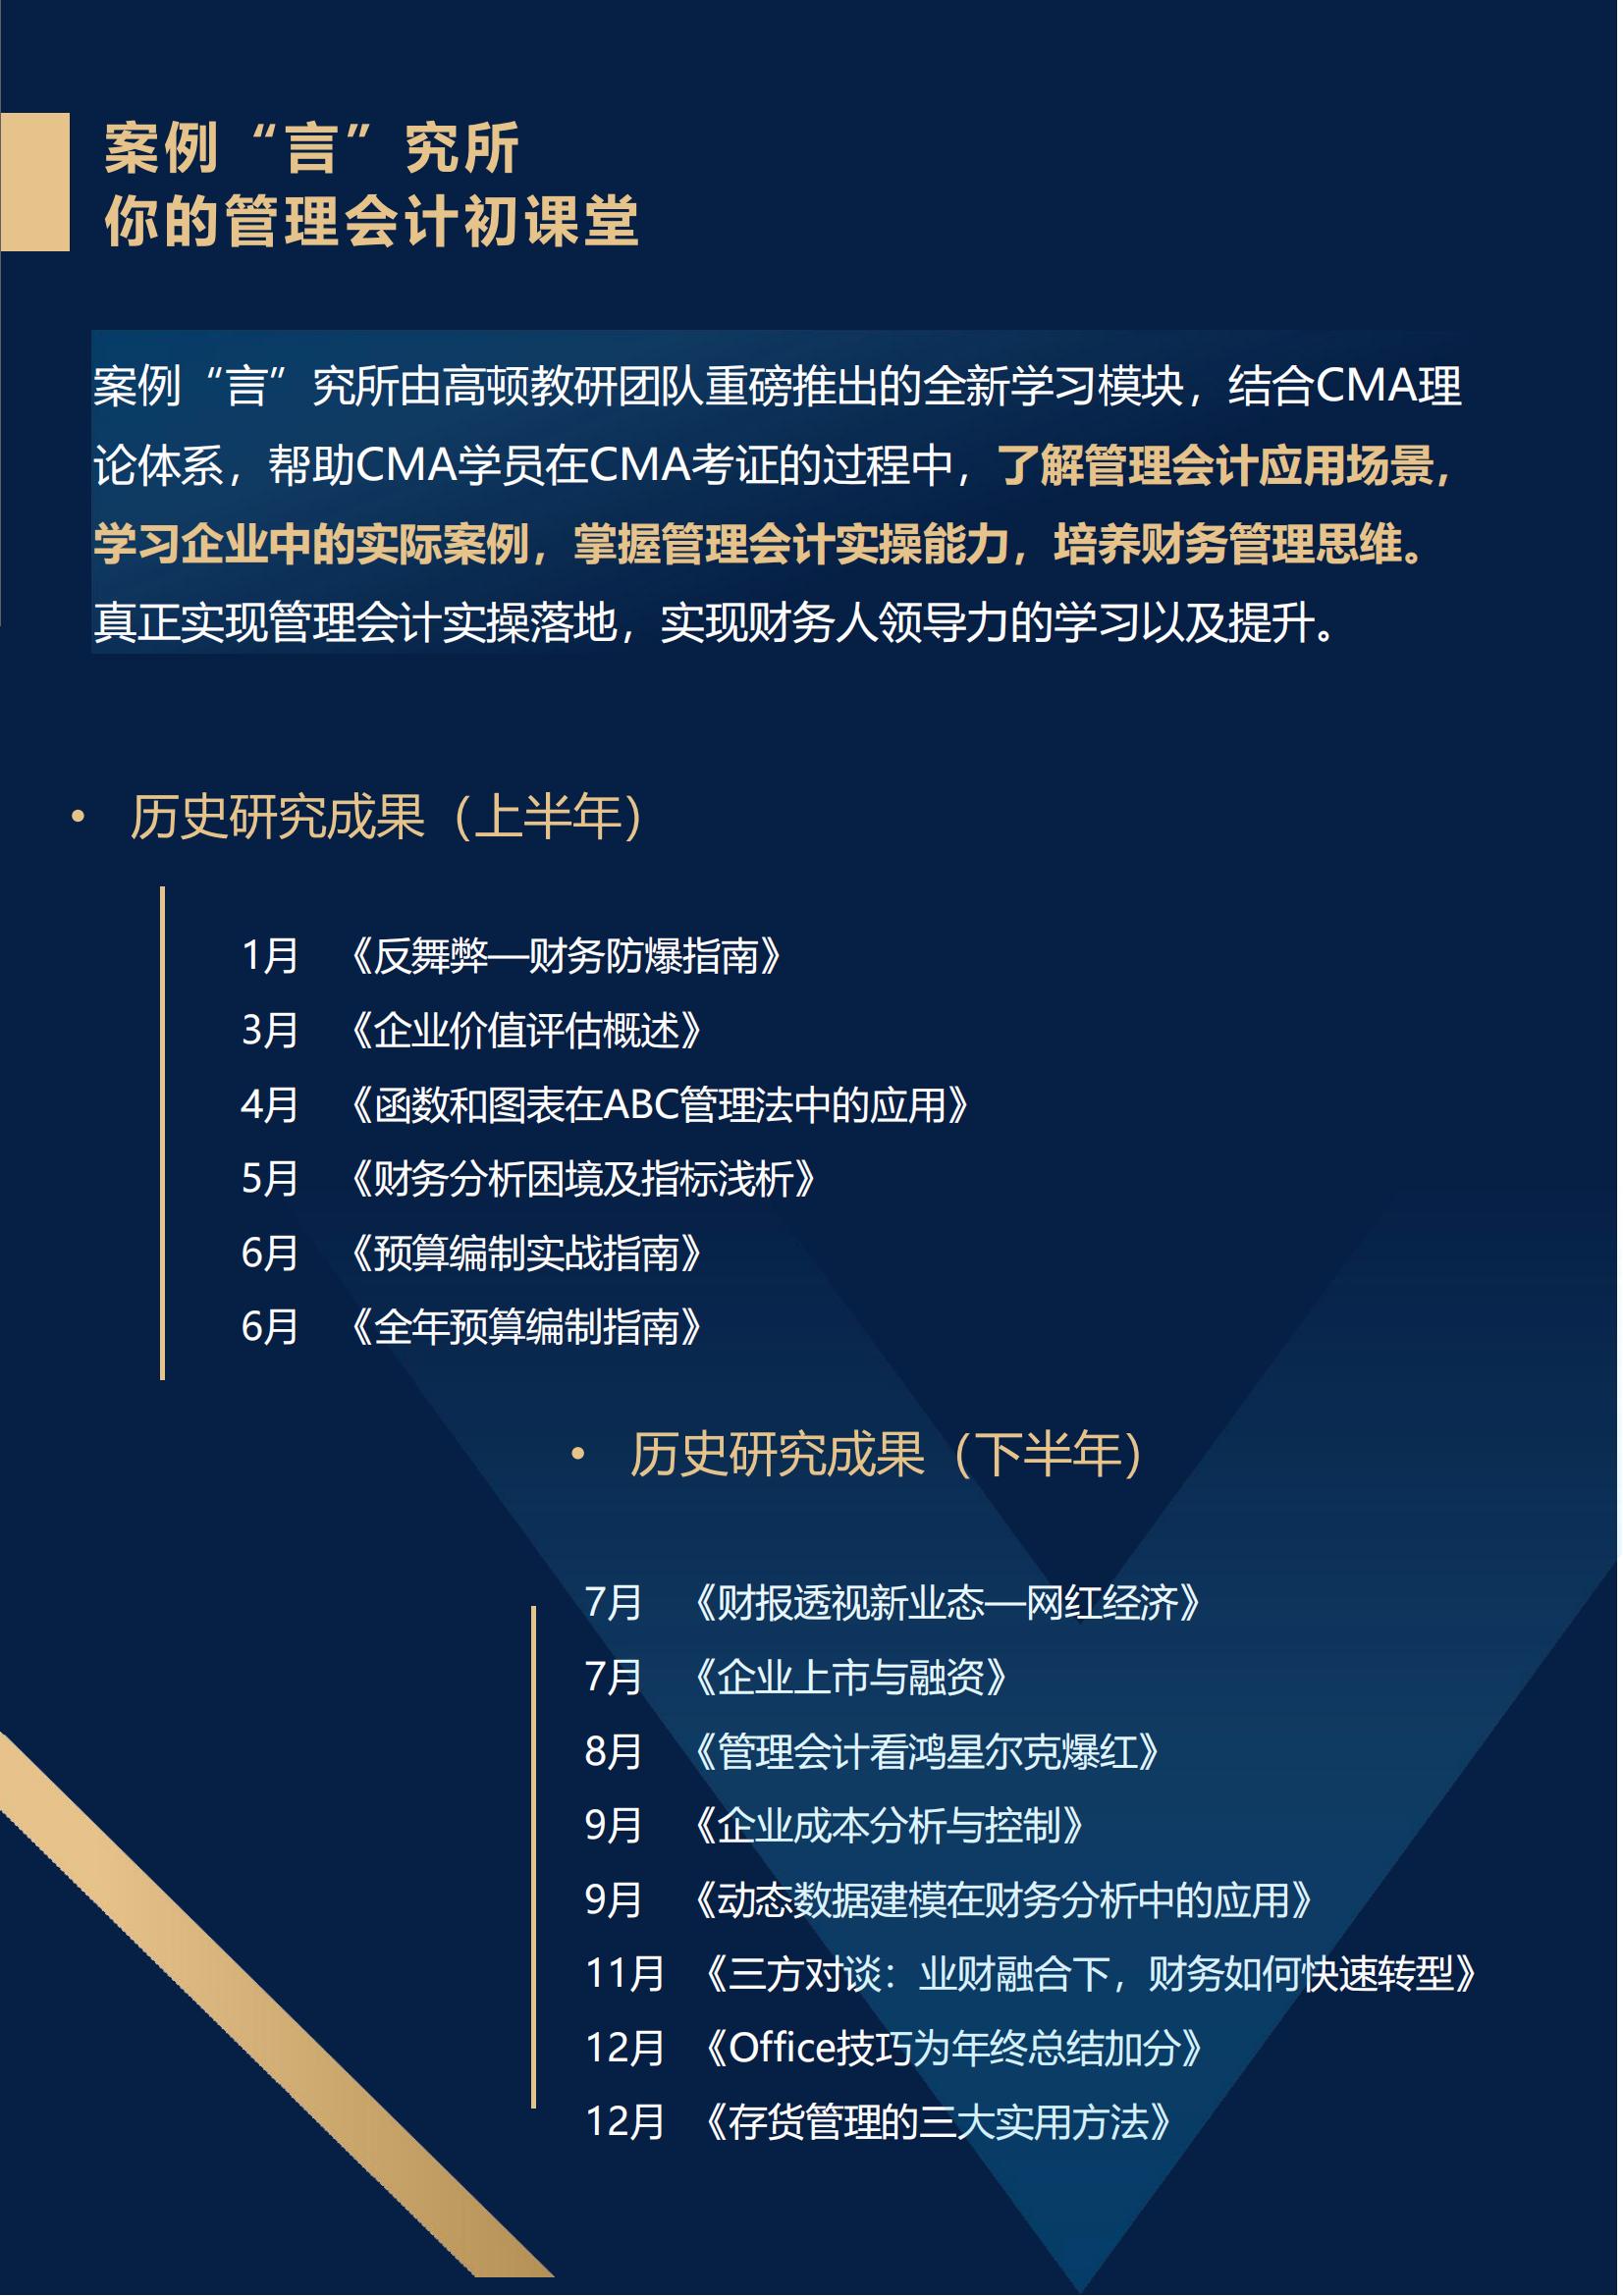 https://simg01.gaodunwangxiao.com/uploadfiles/product-center/202211/25/187a7_20221125141115.jpg